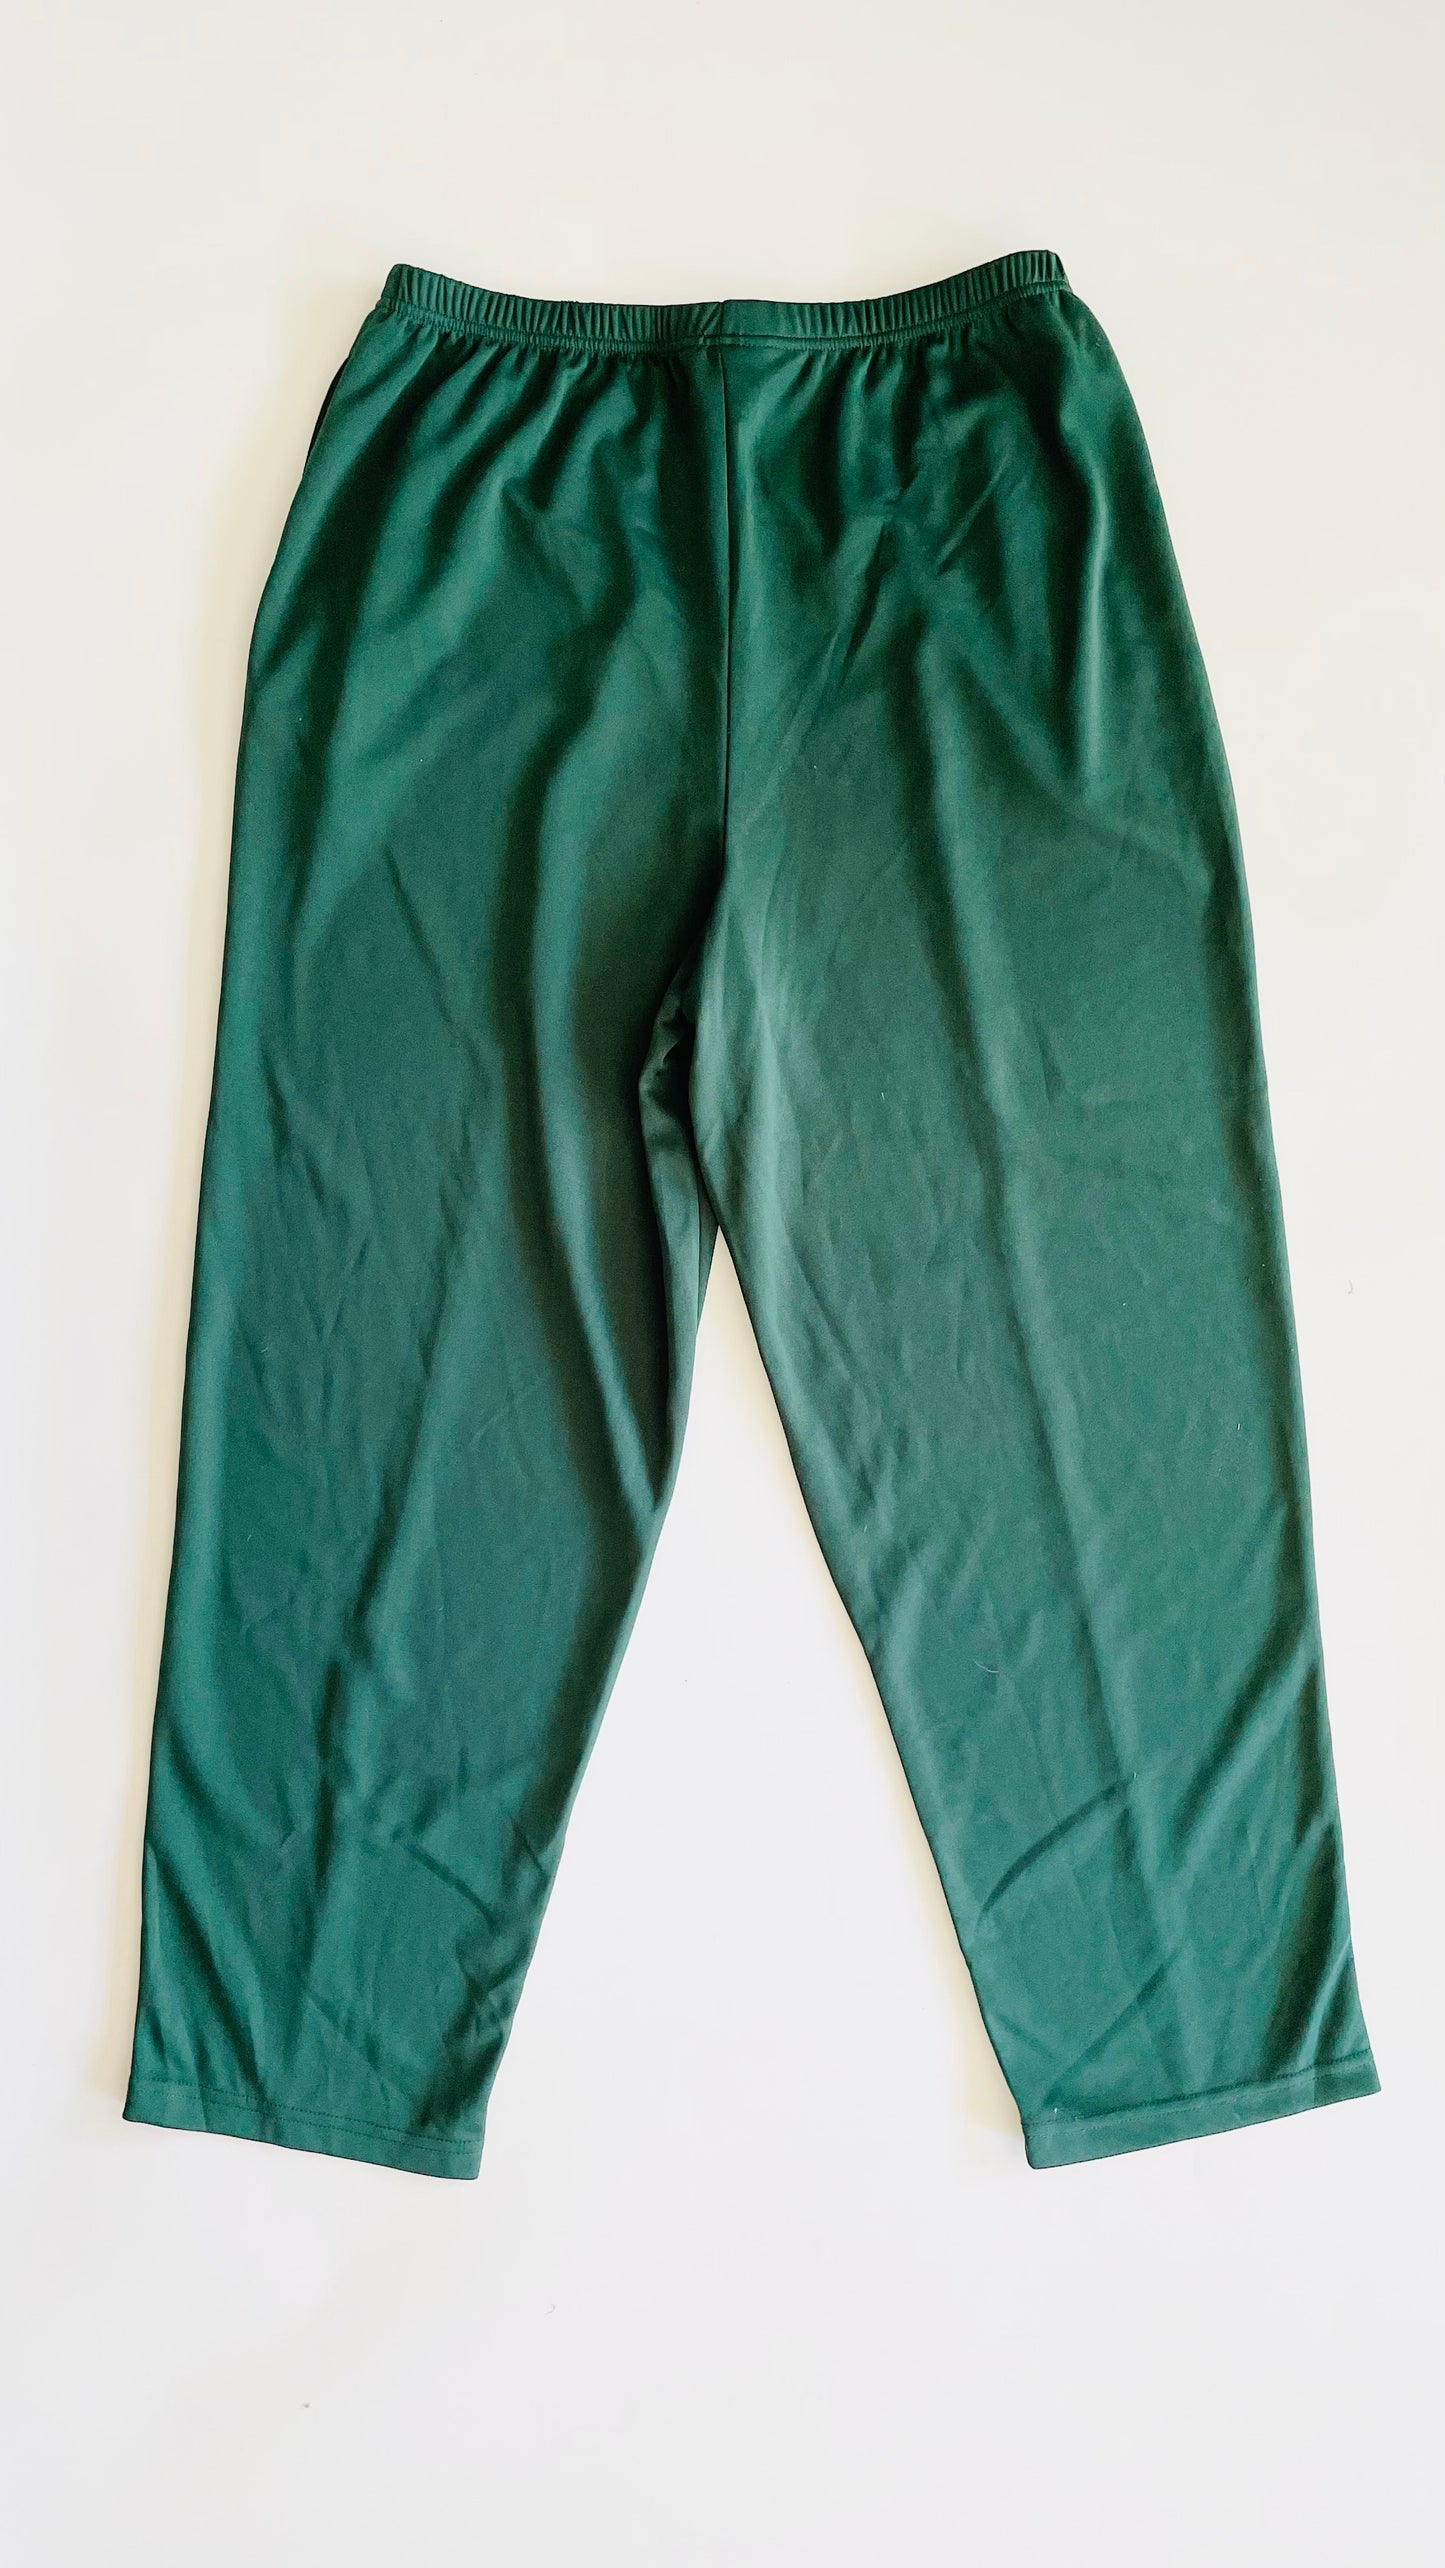 Vintage green warm up track pants - Size 18 / XL